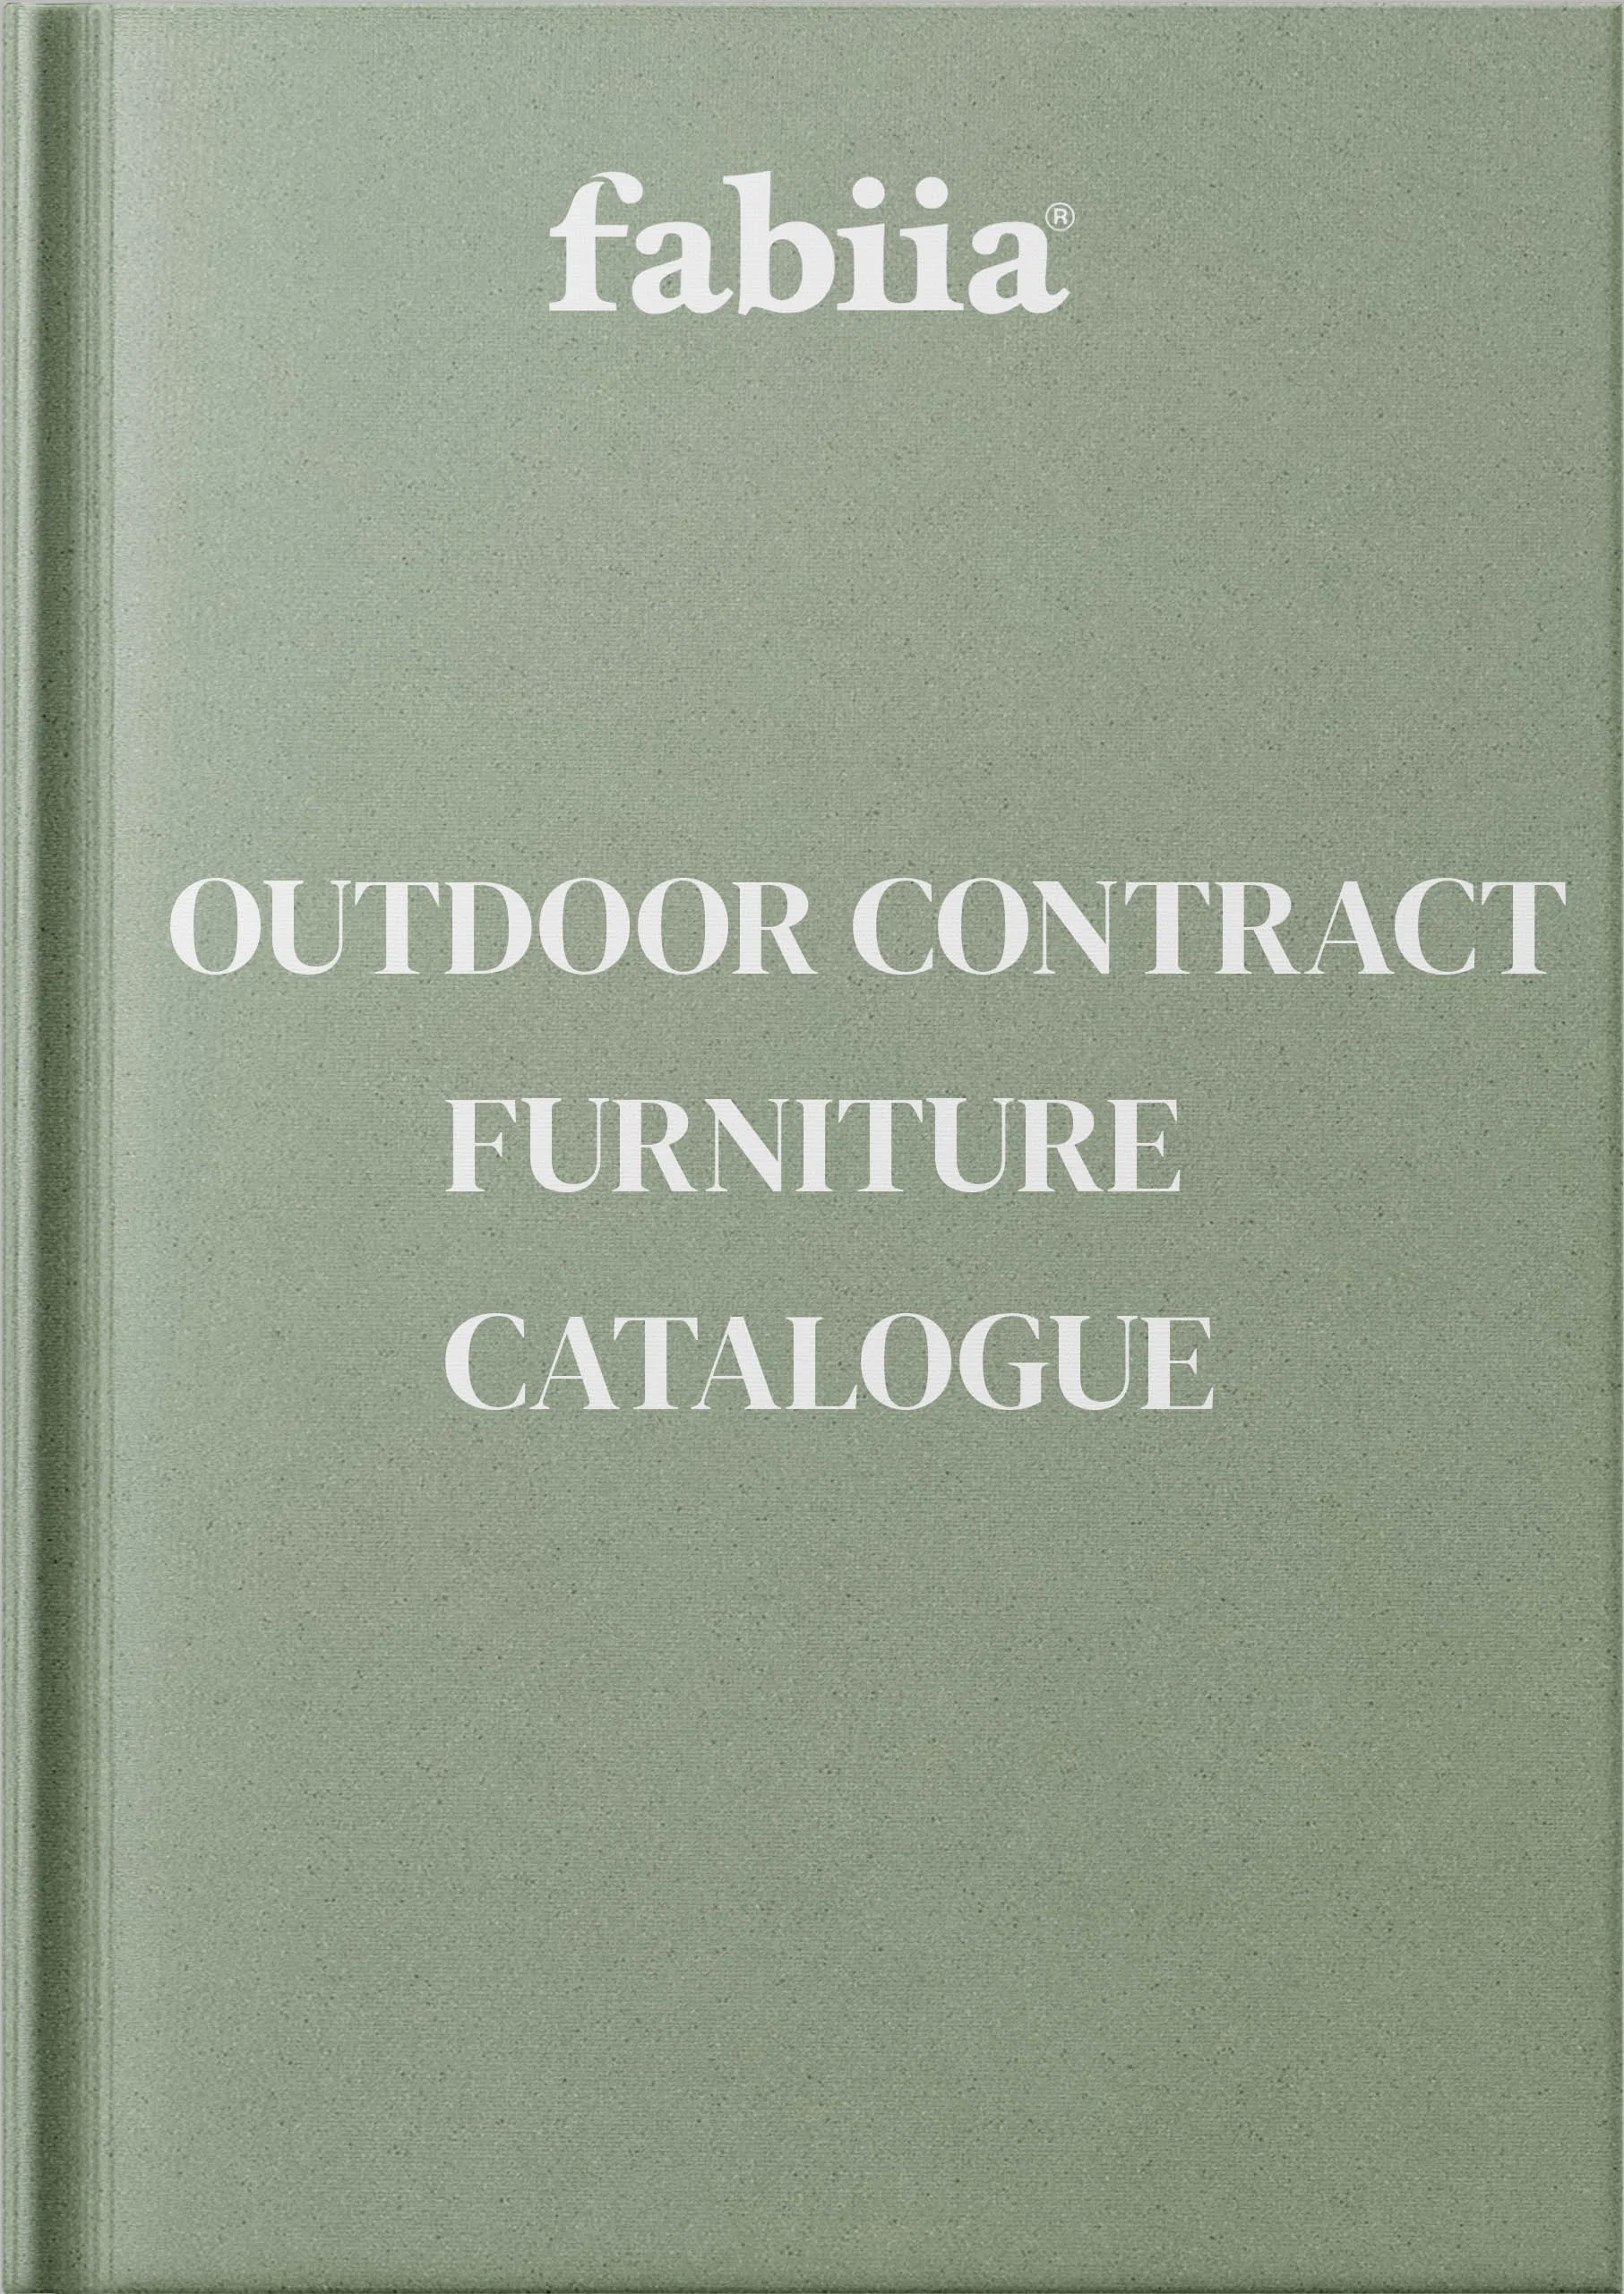 Explore the Fabiia outdoor contract furniture catalogue